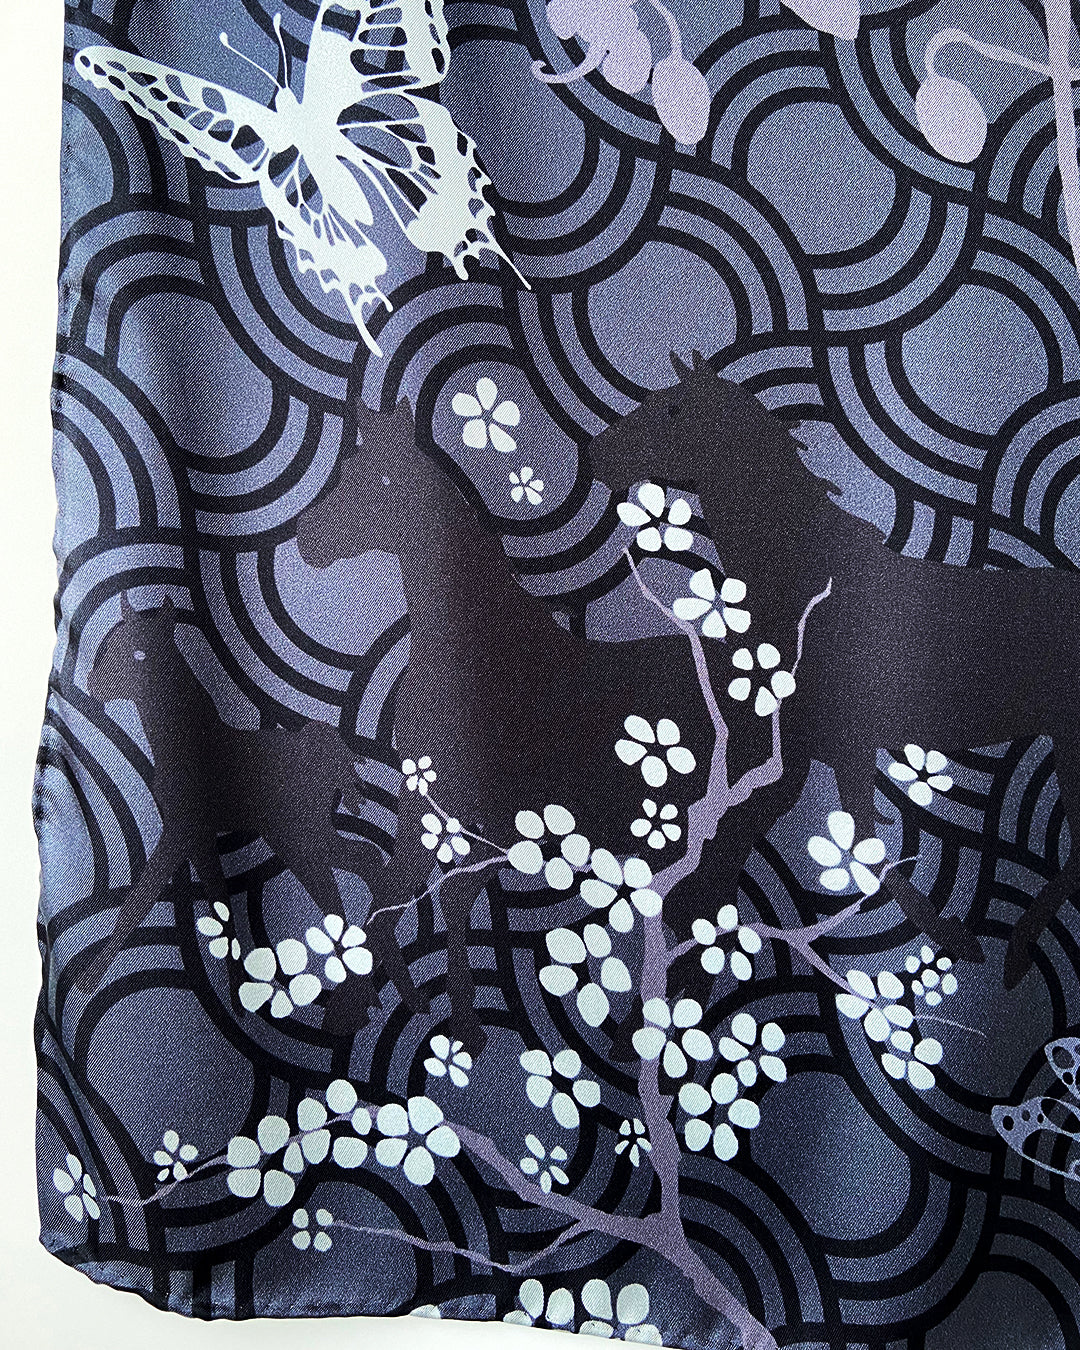 Silketørklæde firkantet, silketørklæde kvadratisk, silketørklæde 90 x90 cm, silketørklæde sort, silketørklæde med kirsebærgrene, silketørklæde i flotte grå og sorte farver, silketørklæde med heste og sommerfugle, silketørklæde med blomster og sommerfugle, silketørklæde i flot design, Silketørklæde i 100 % ren silke, silketørklæde i ægte silke twill, silketørklæde med design af Susanne Schjerning, silketørklæde med rullede kanter. Giv et silketørklæde i gave. Bæredygtigt silketørklæde i dansk design.